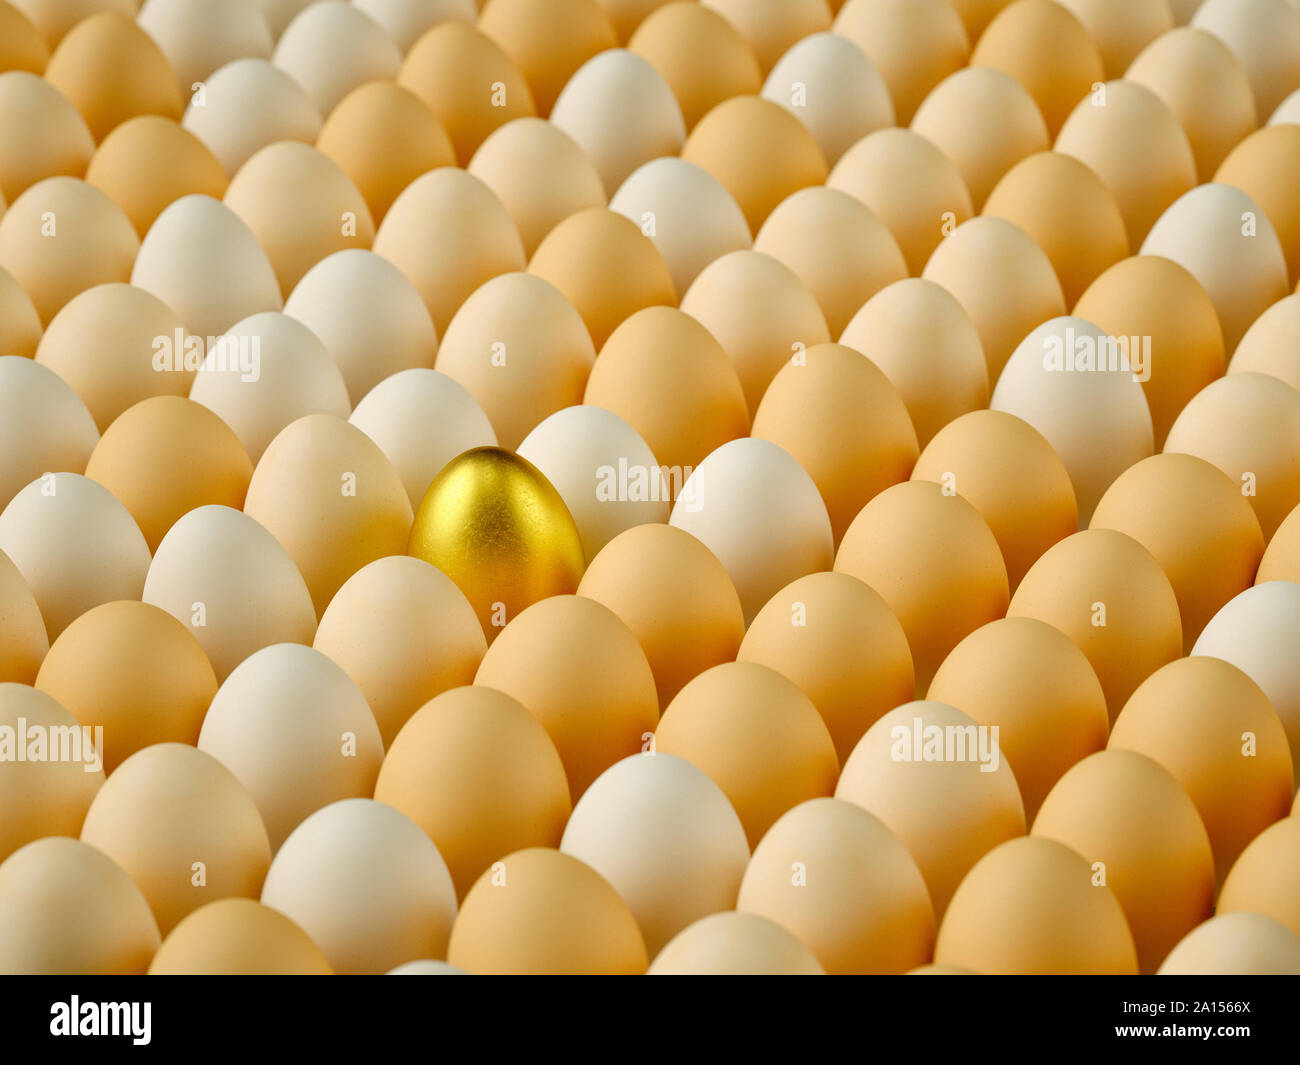 Golden egg amongst a large group of eggs Stock Photo